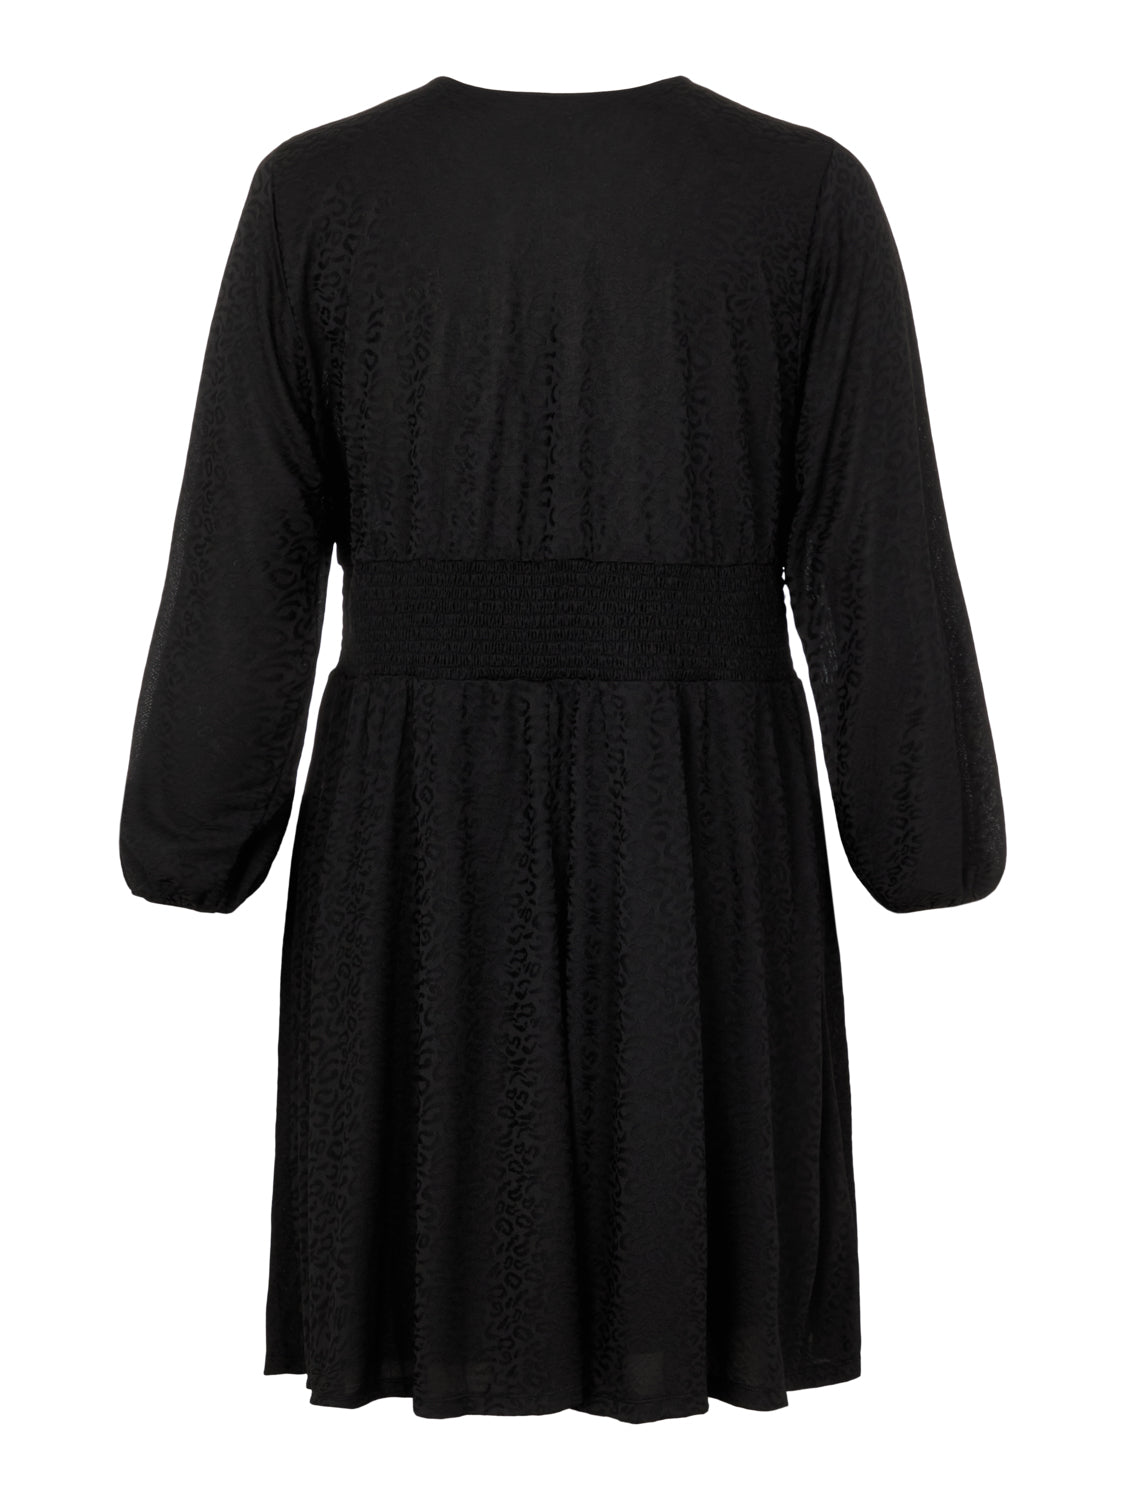 VISTEVIA Dress - Black